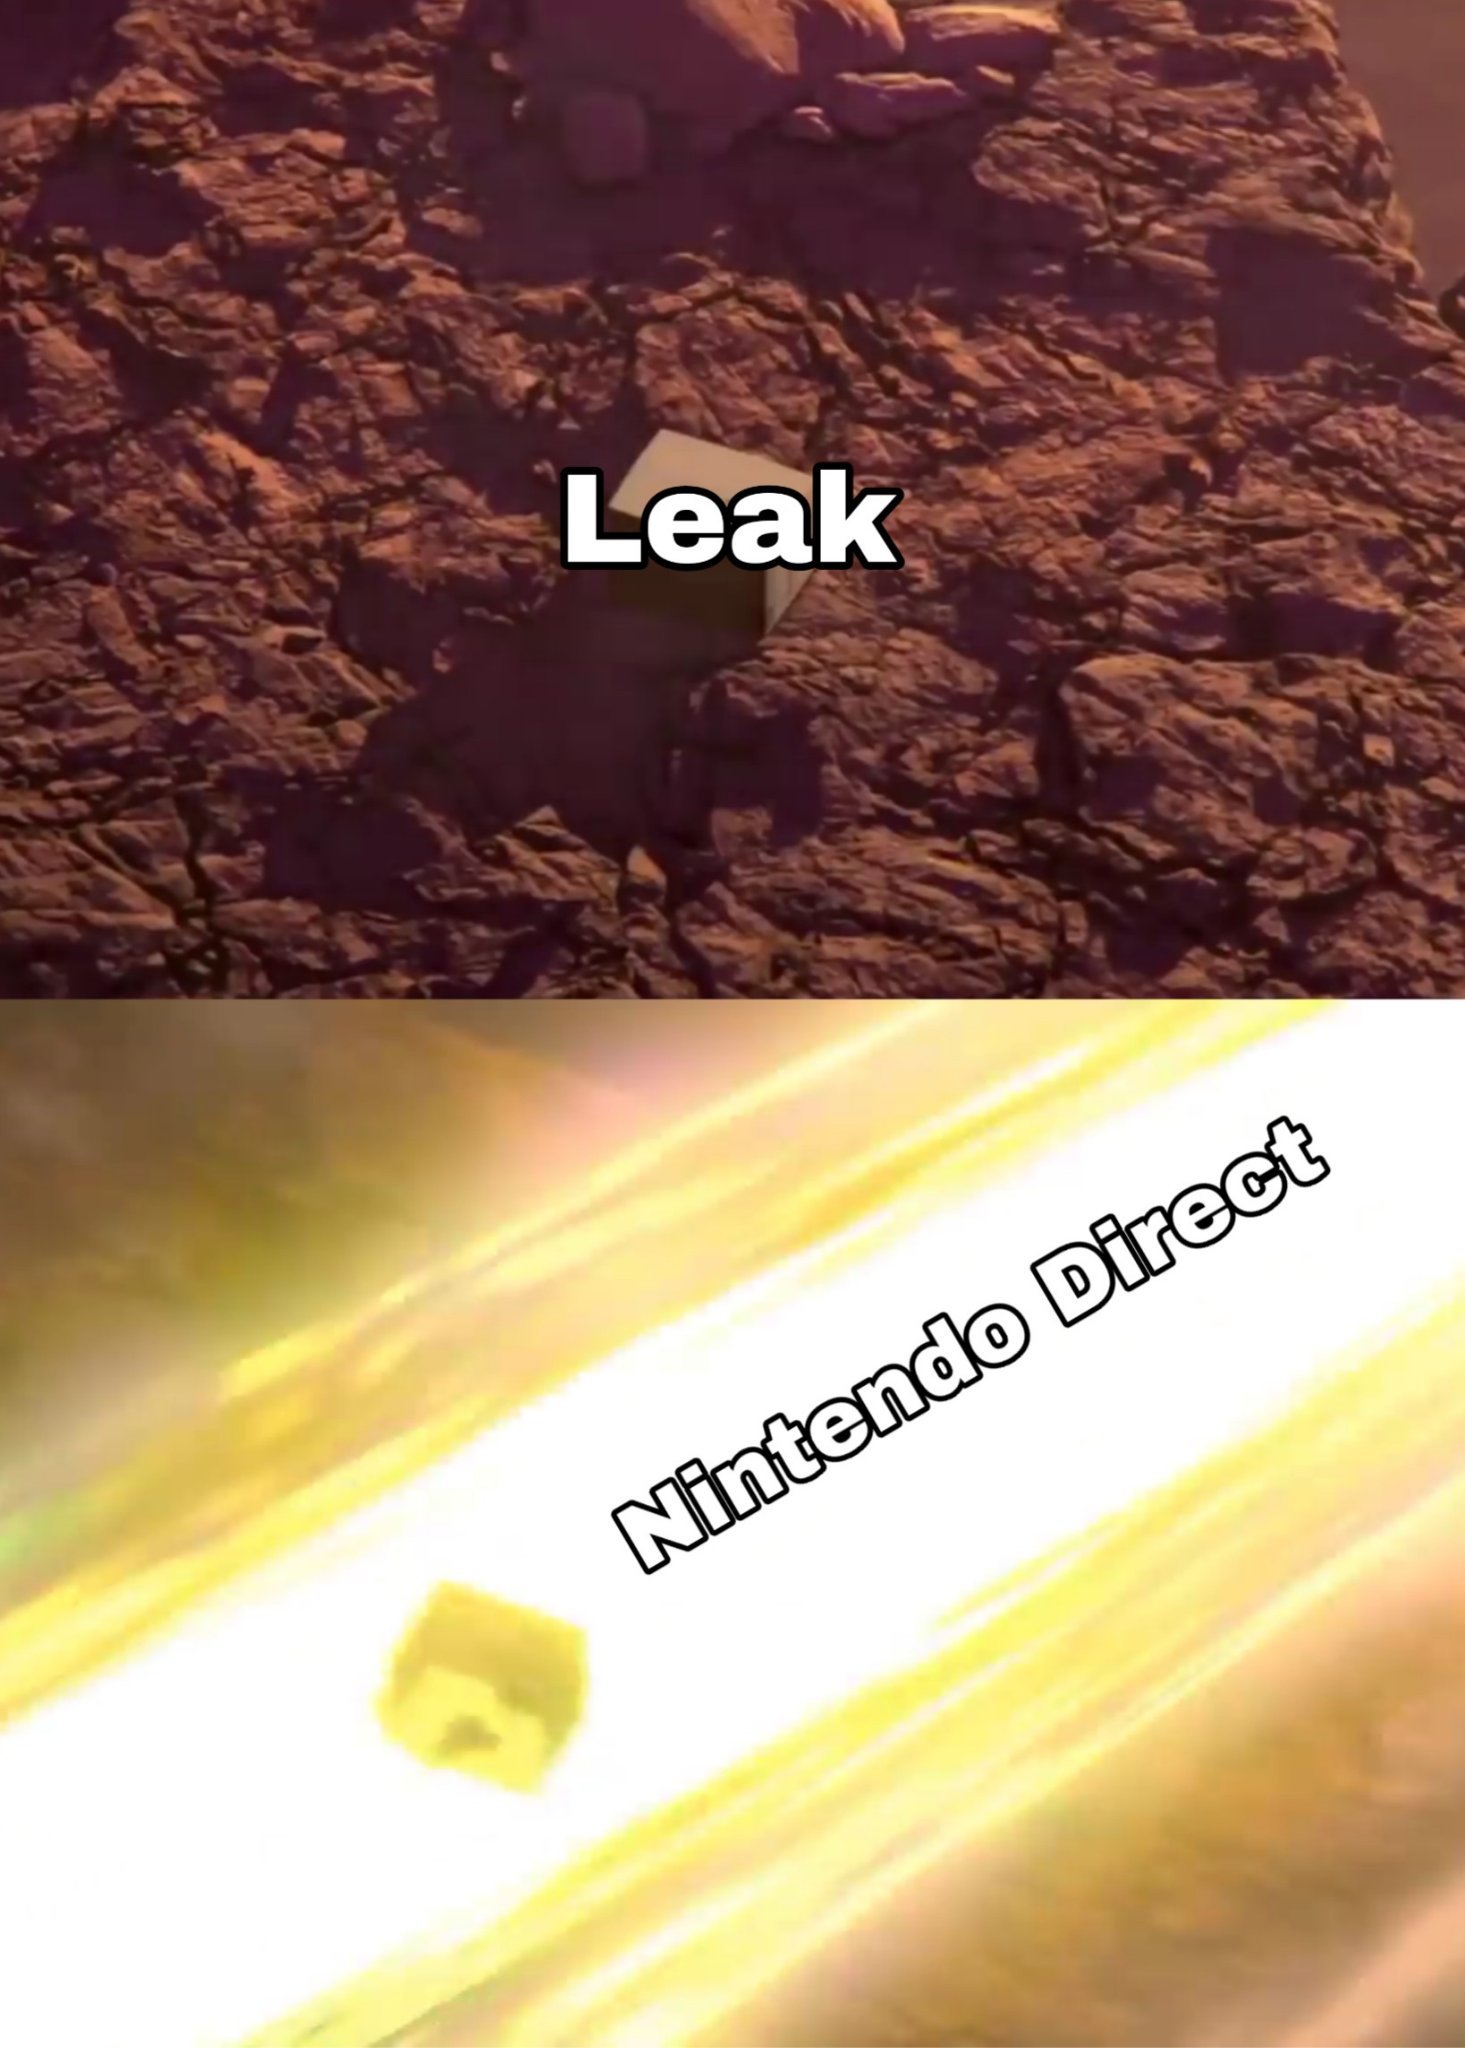 Leak = filtracion para quien no sepa - meme